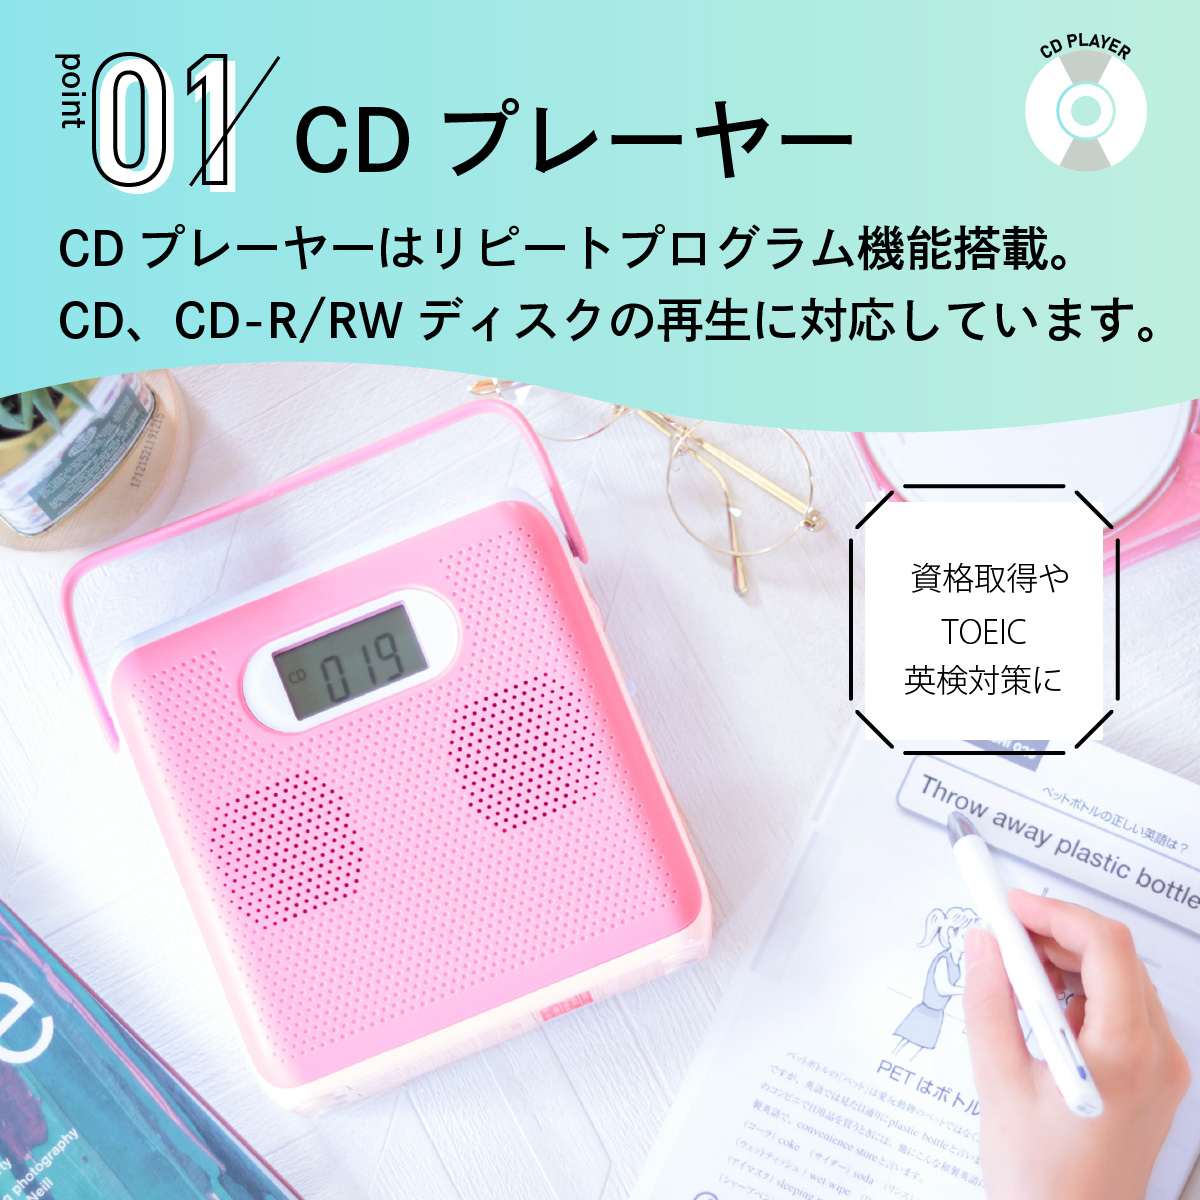 CD player stereo CD radio Cubic design AudioComm pink lRCR-600Z-P 03-5025 ohm electro- machine 